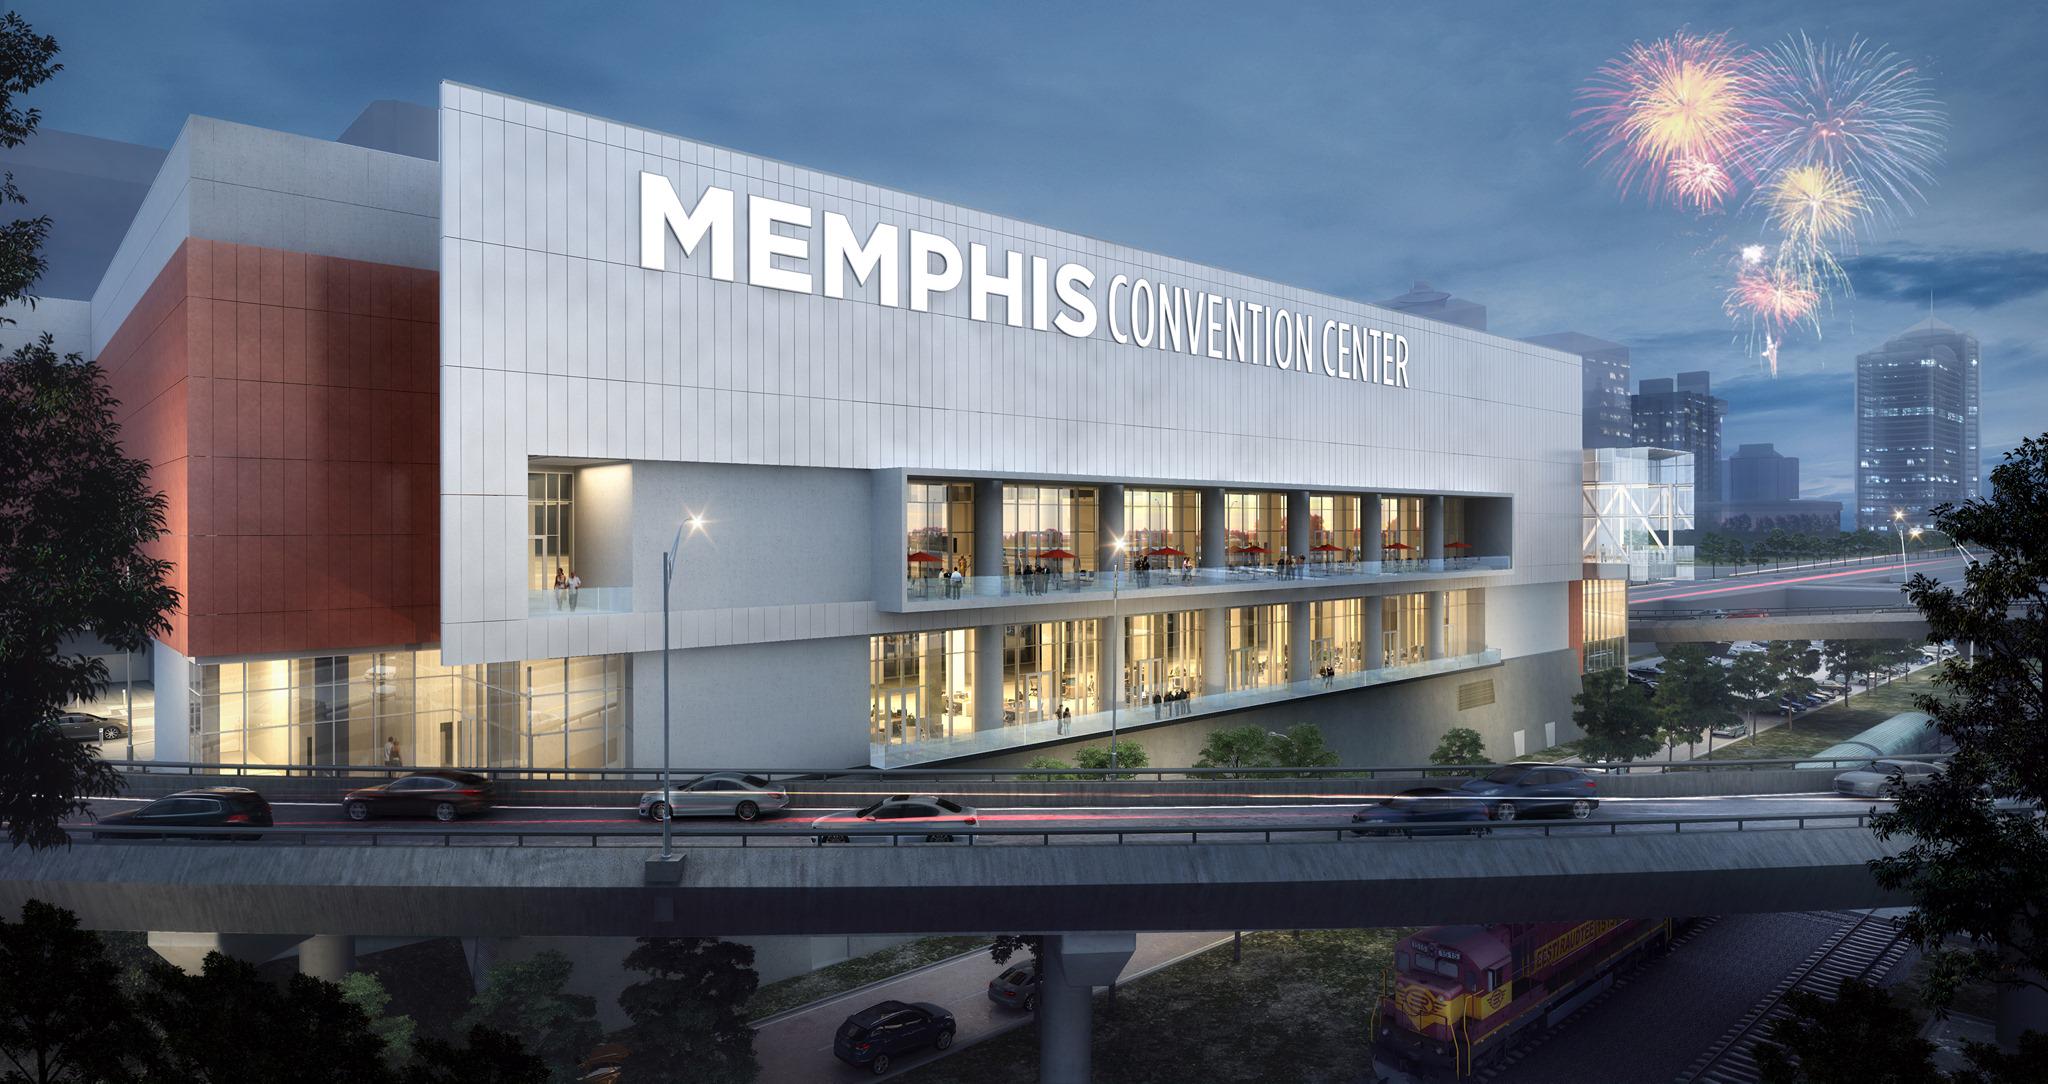 Memphis Cook Convention Center